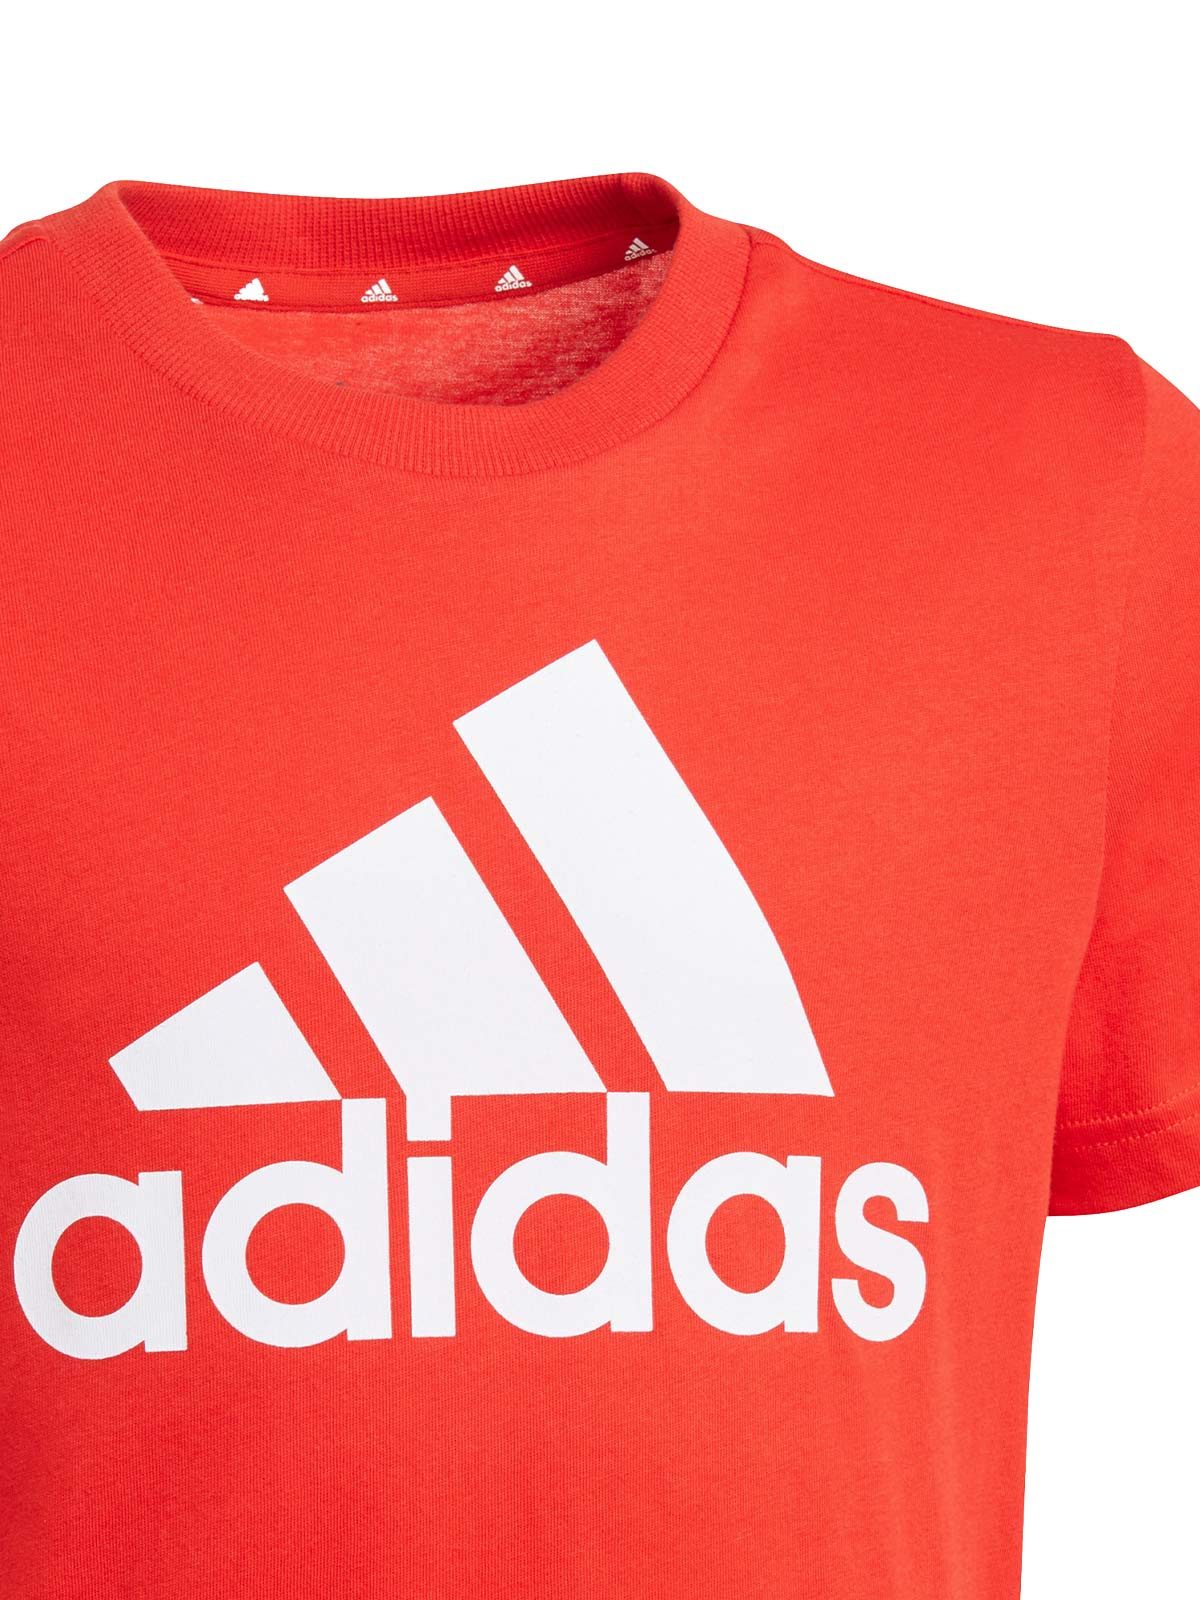 MODA BAMBINI Camicie & T-shirt Sportivo Adidas T-shirt sconto 96% Arancione 5A 